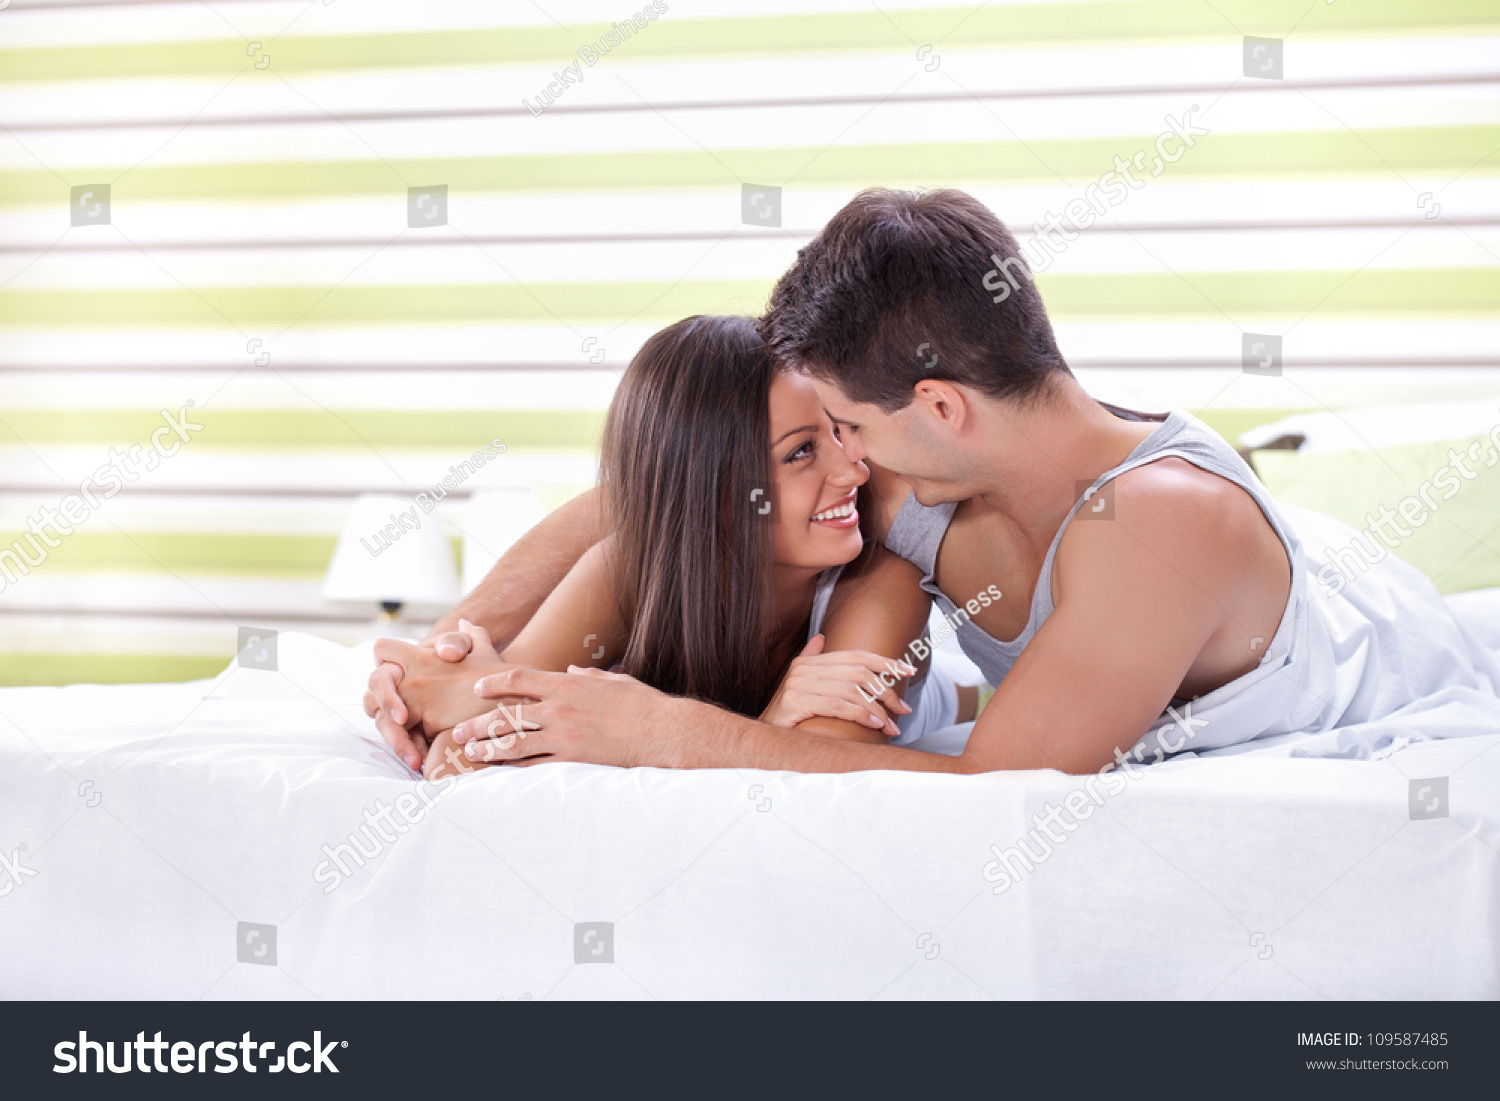 Young Love Couple Bed Romantic Scene Stock Photo 109587485